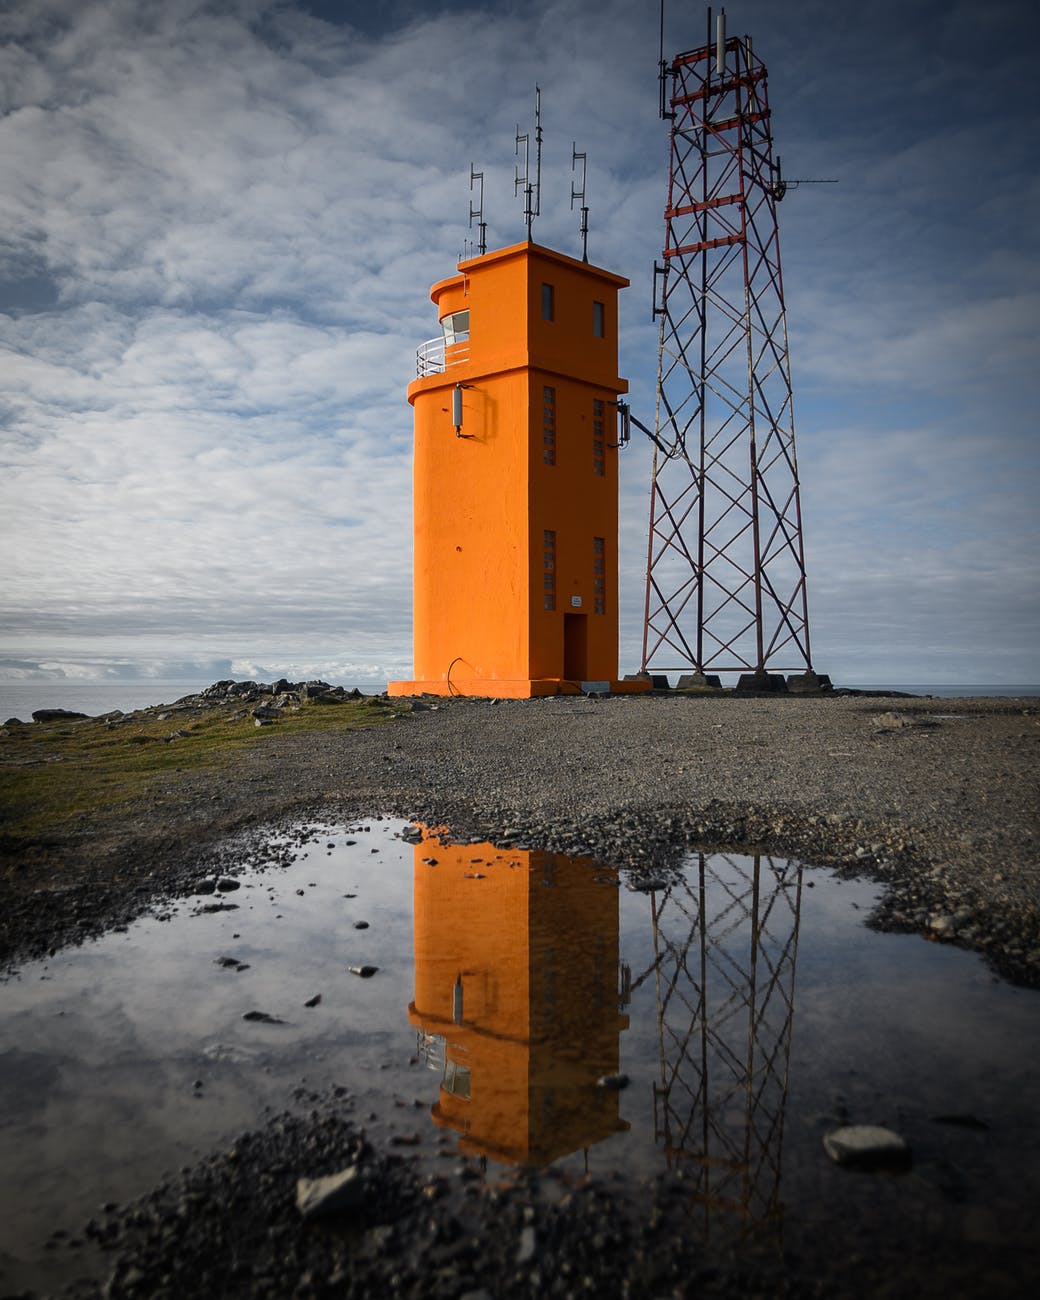 orange tower beside metal tower during day